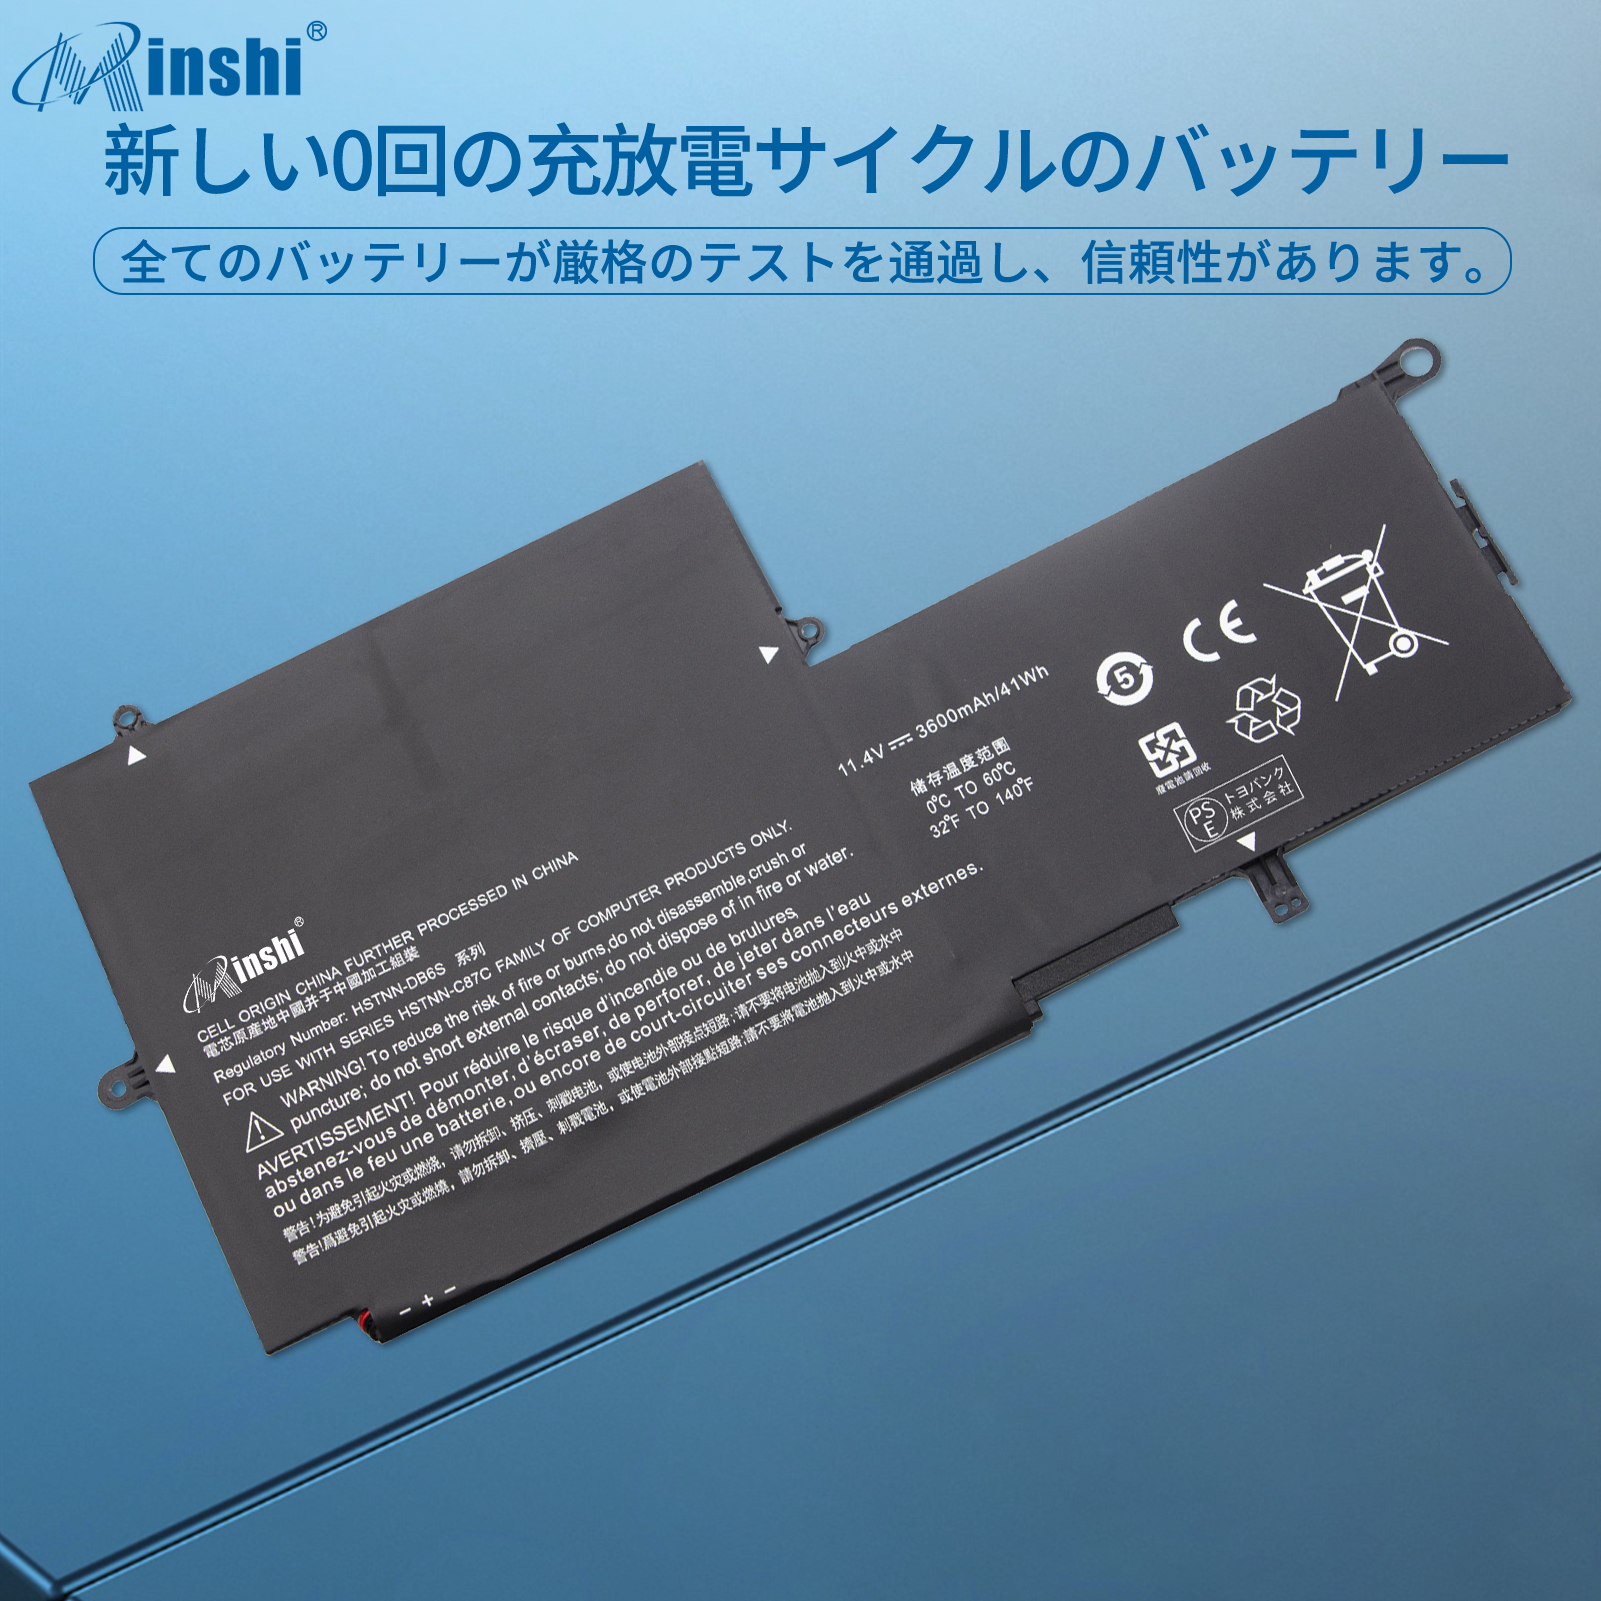 minshi】HP Spectre 13-4129TU x360【3600mAh 11.4V】対応用 高性能